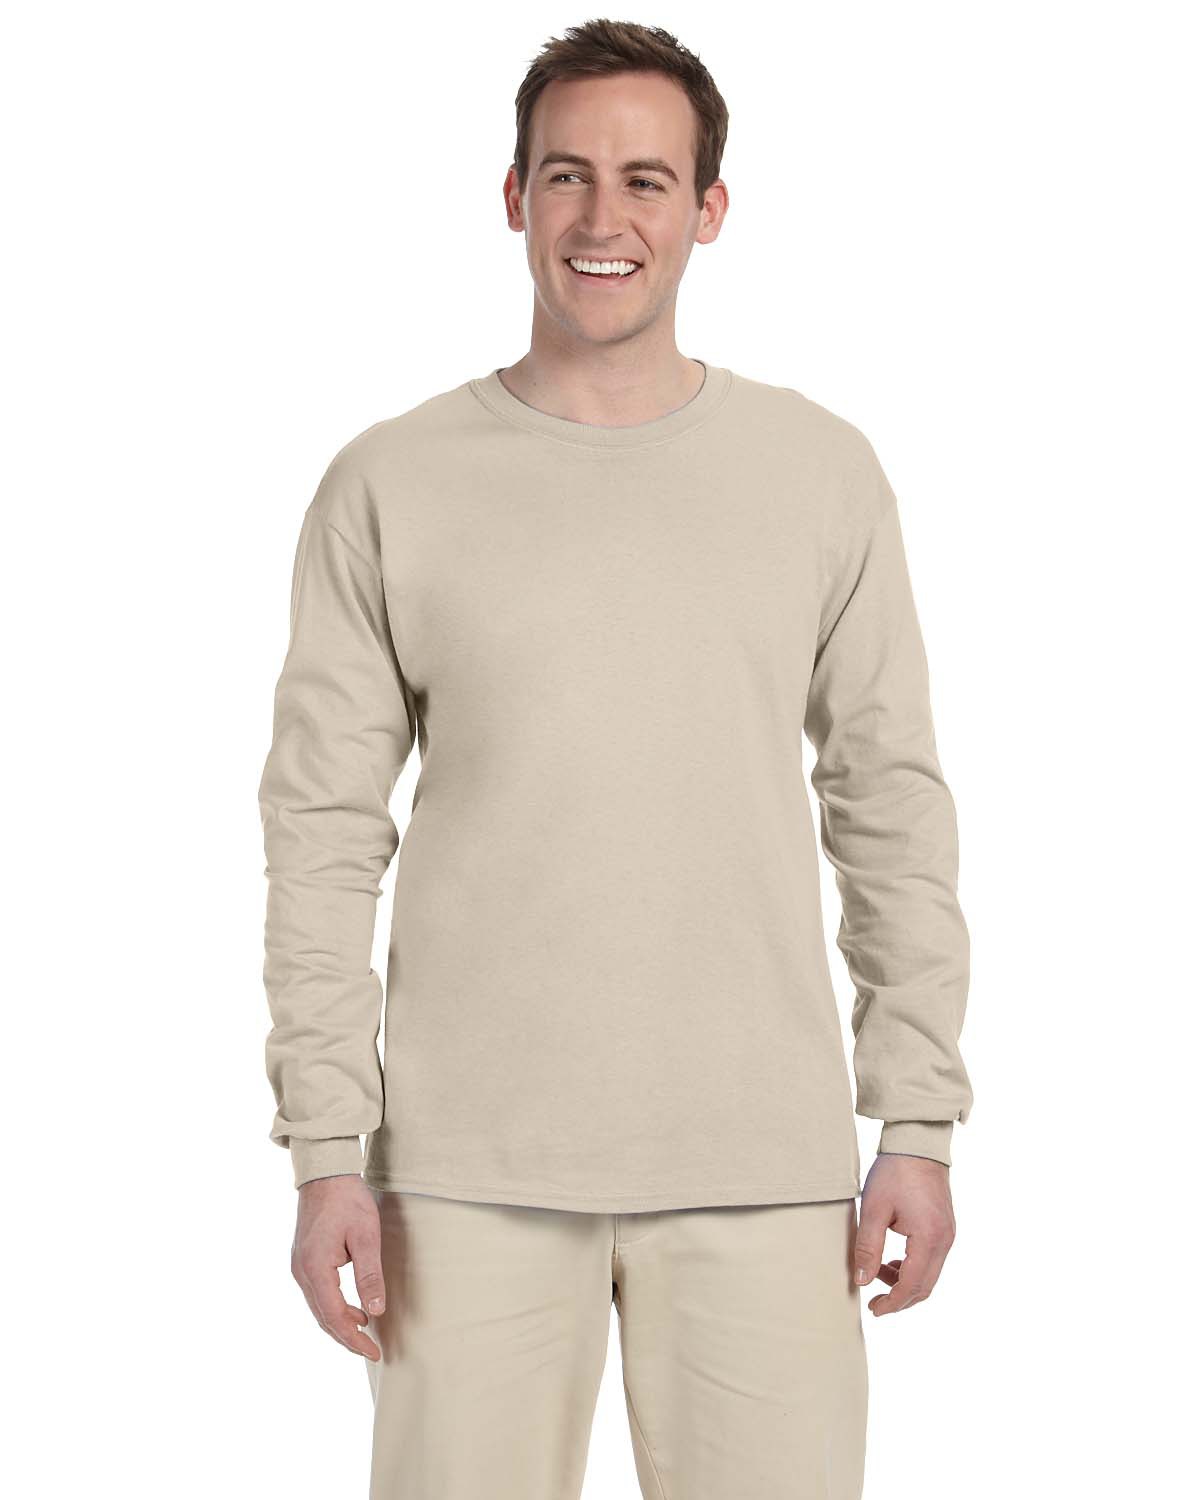 10 Blank Gildan Ultra Cotton Long Sleeve T-Shirt Lot ok to mix 2XL-5XL & Colors